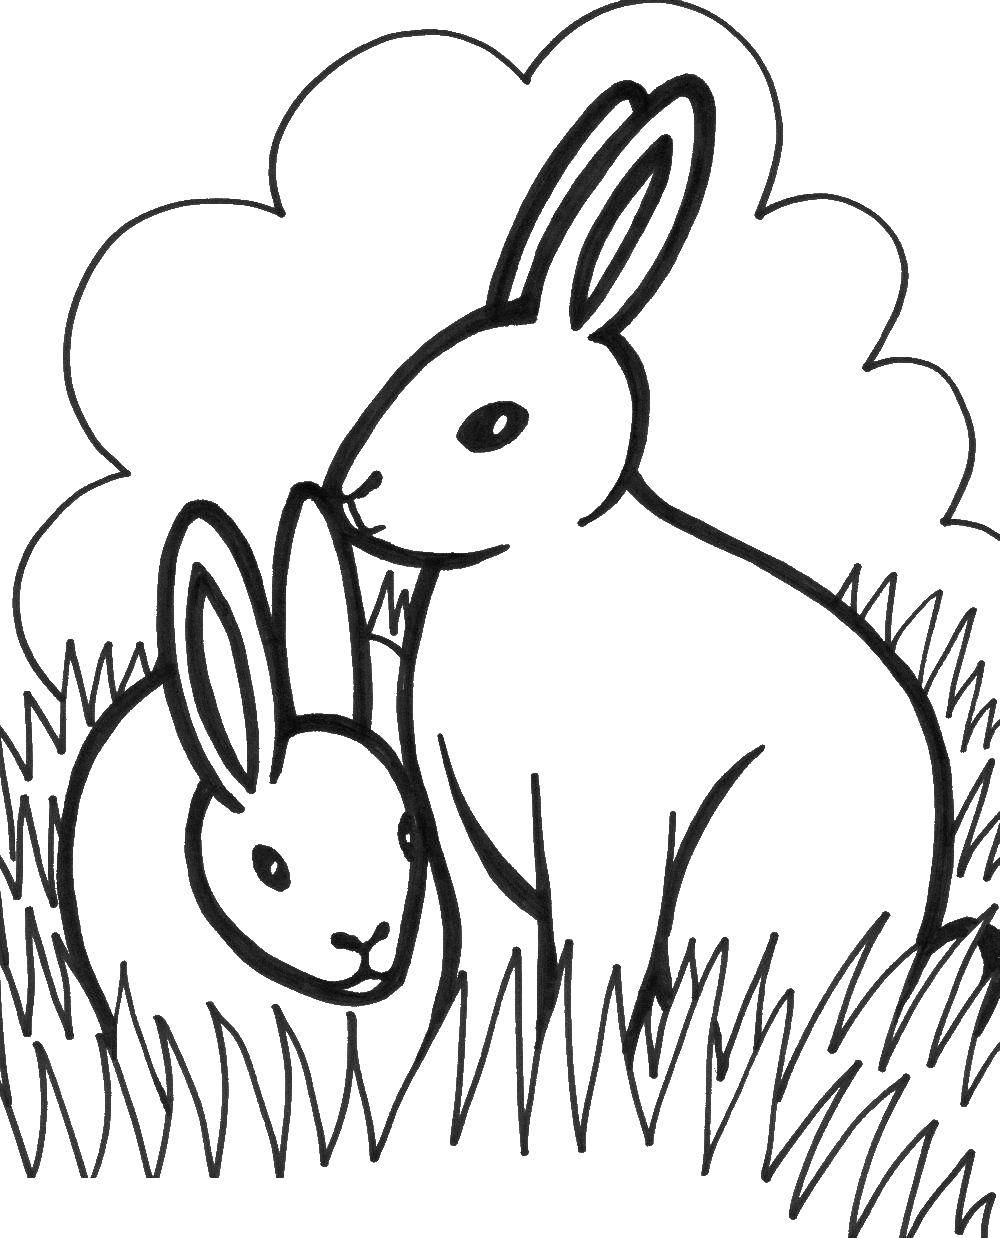 Название: Раскраска Два кролика в траве. Категория: животные. Теги: животные, кролики.